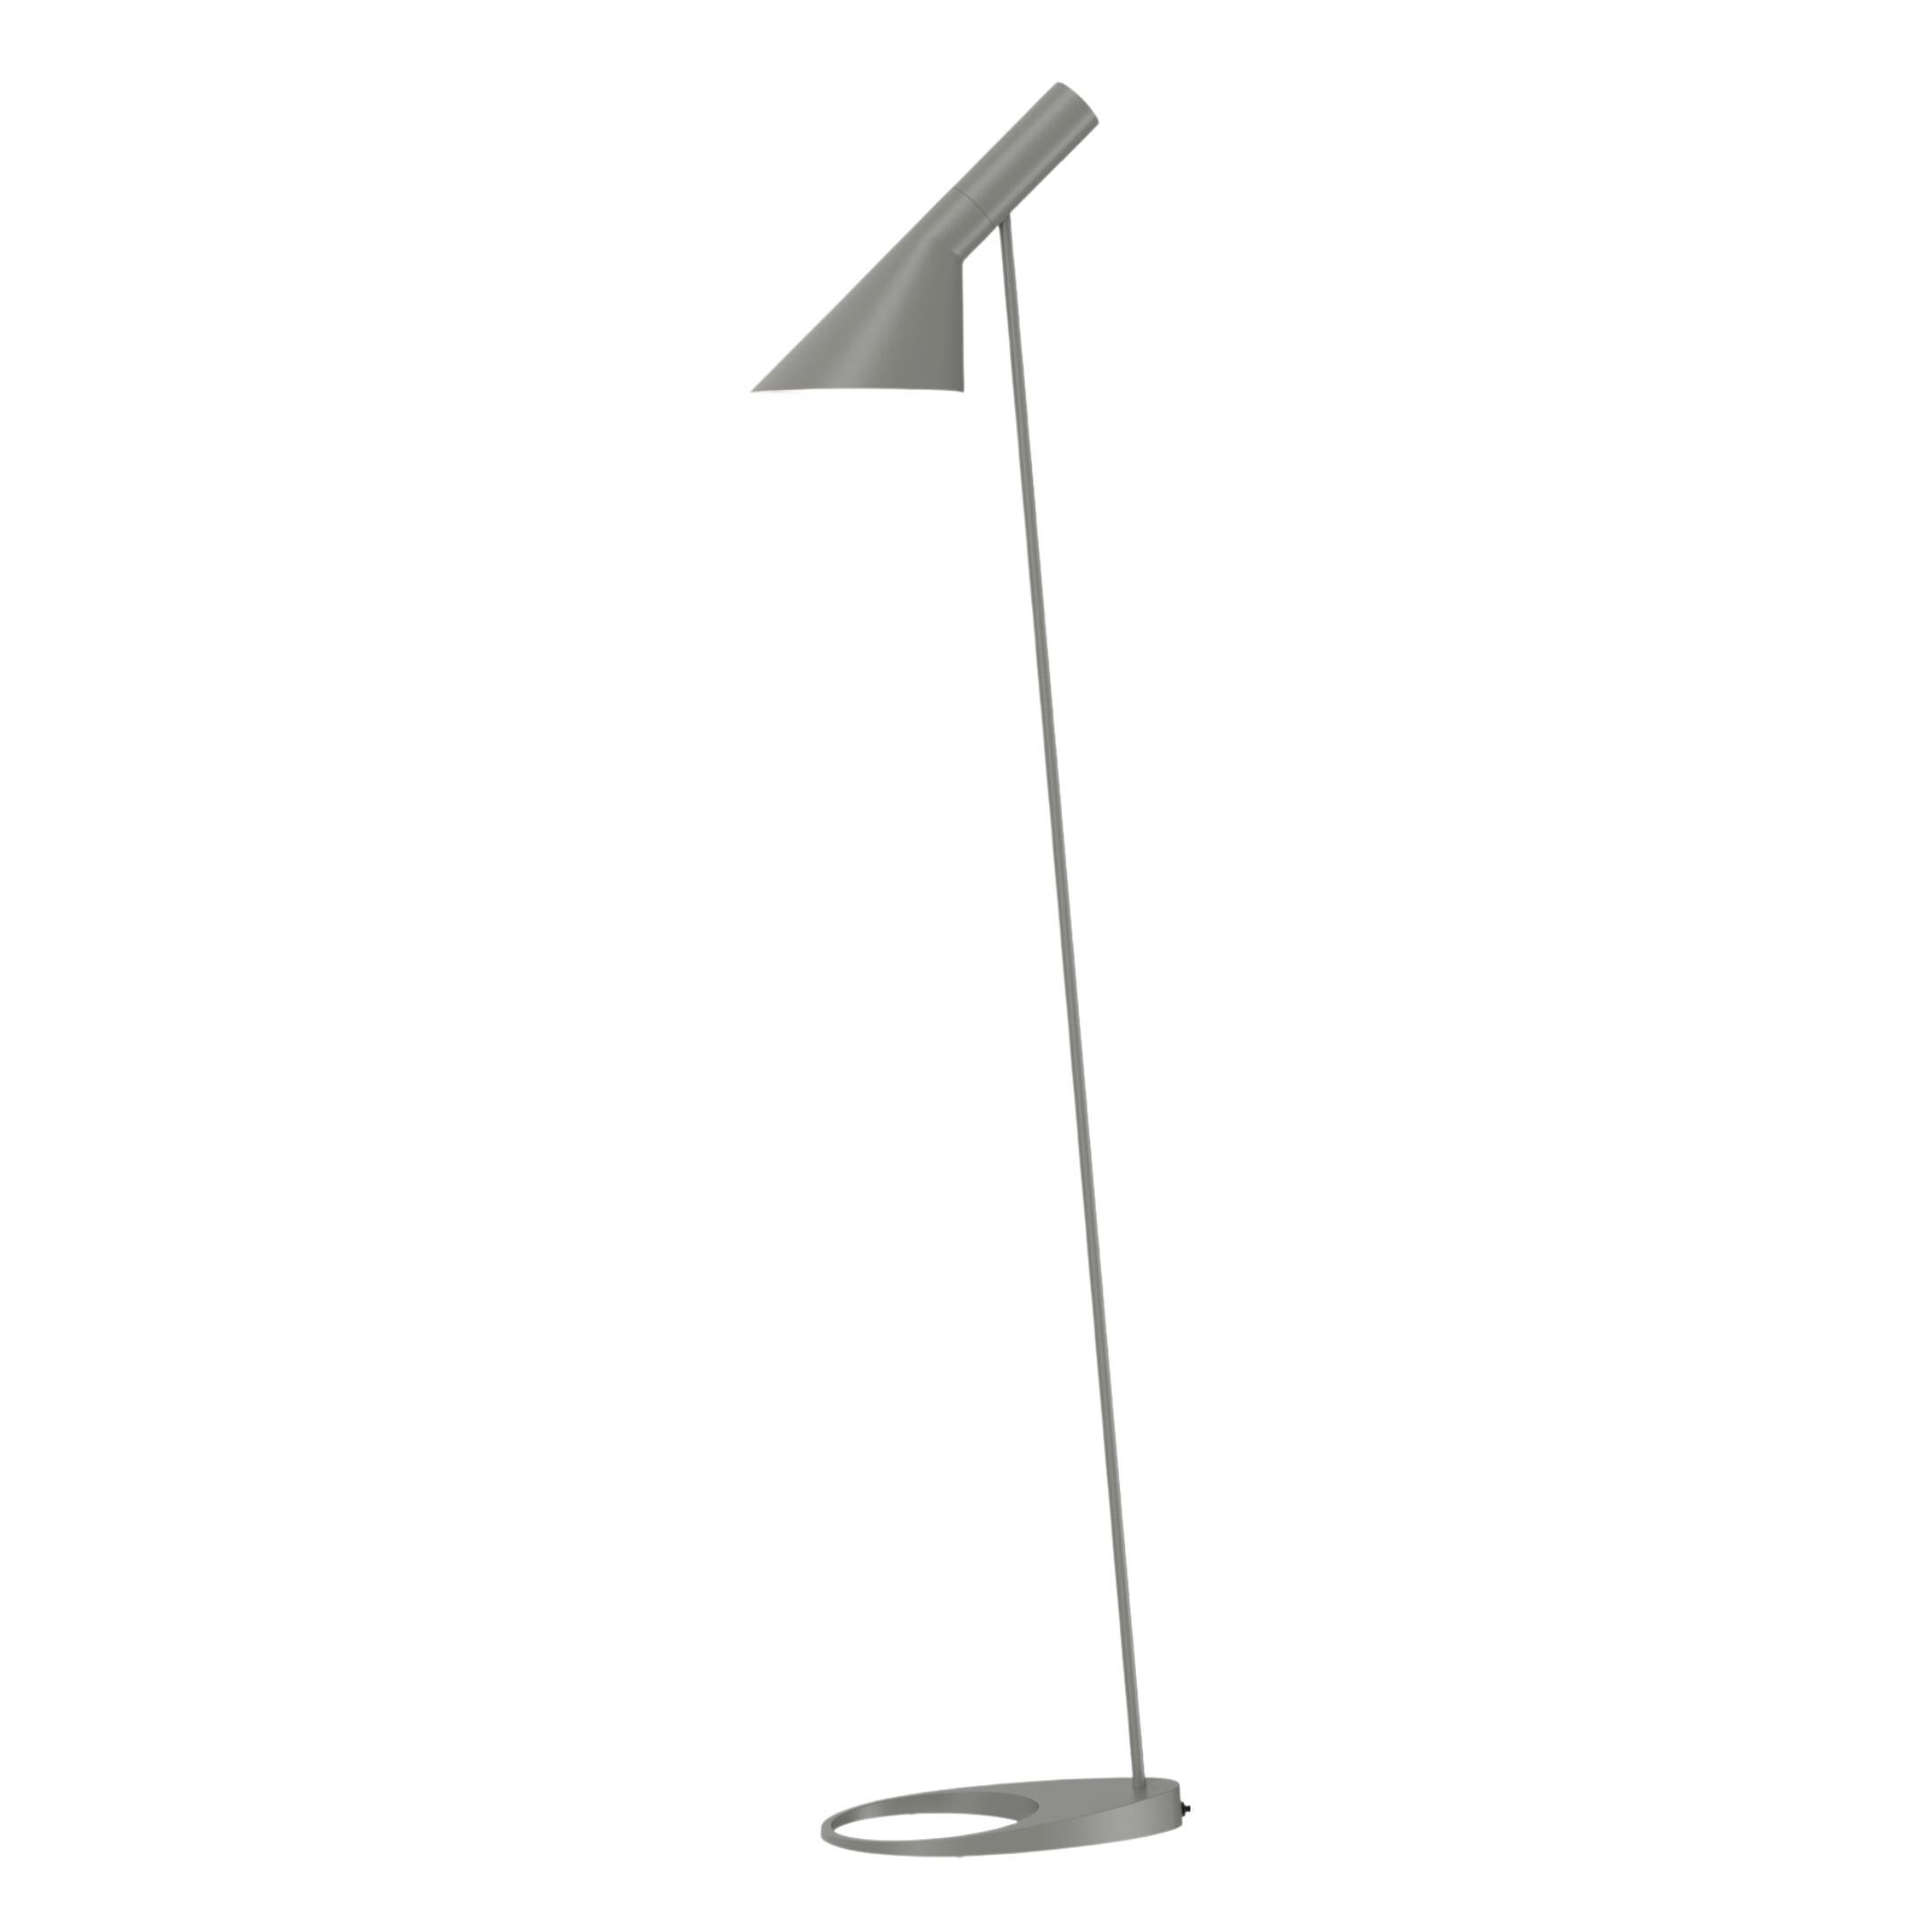 Arne Jacobsen AJ Floor Lamp in Pale Petroleum for Louis Poulsen For Sale 4